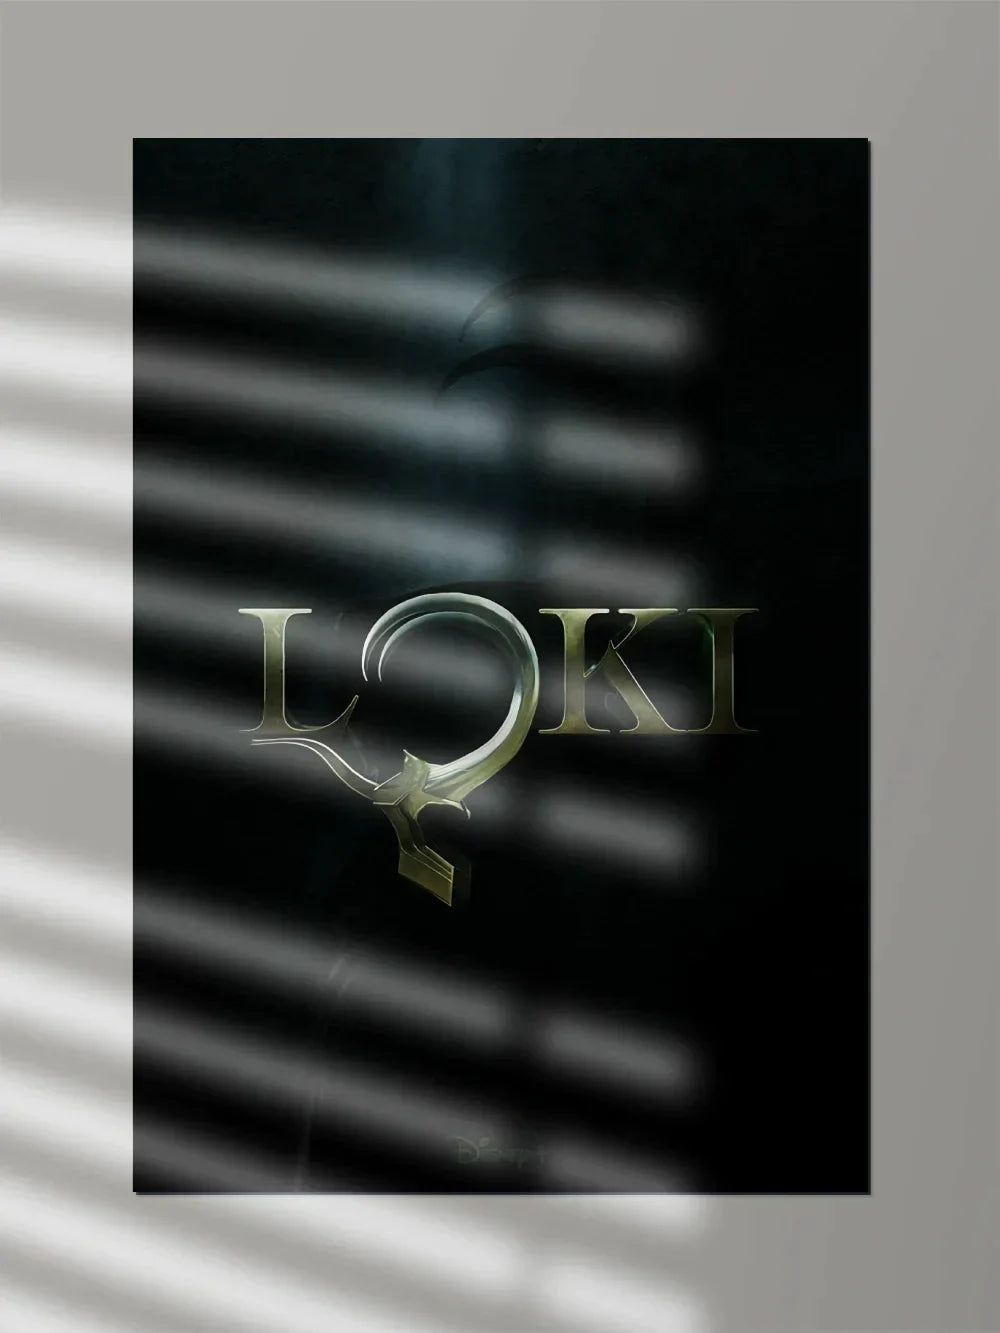 Loki The God Of Mischiefs | Series Poster #02